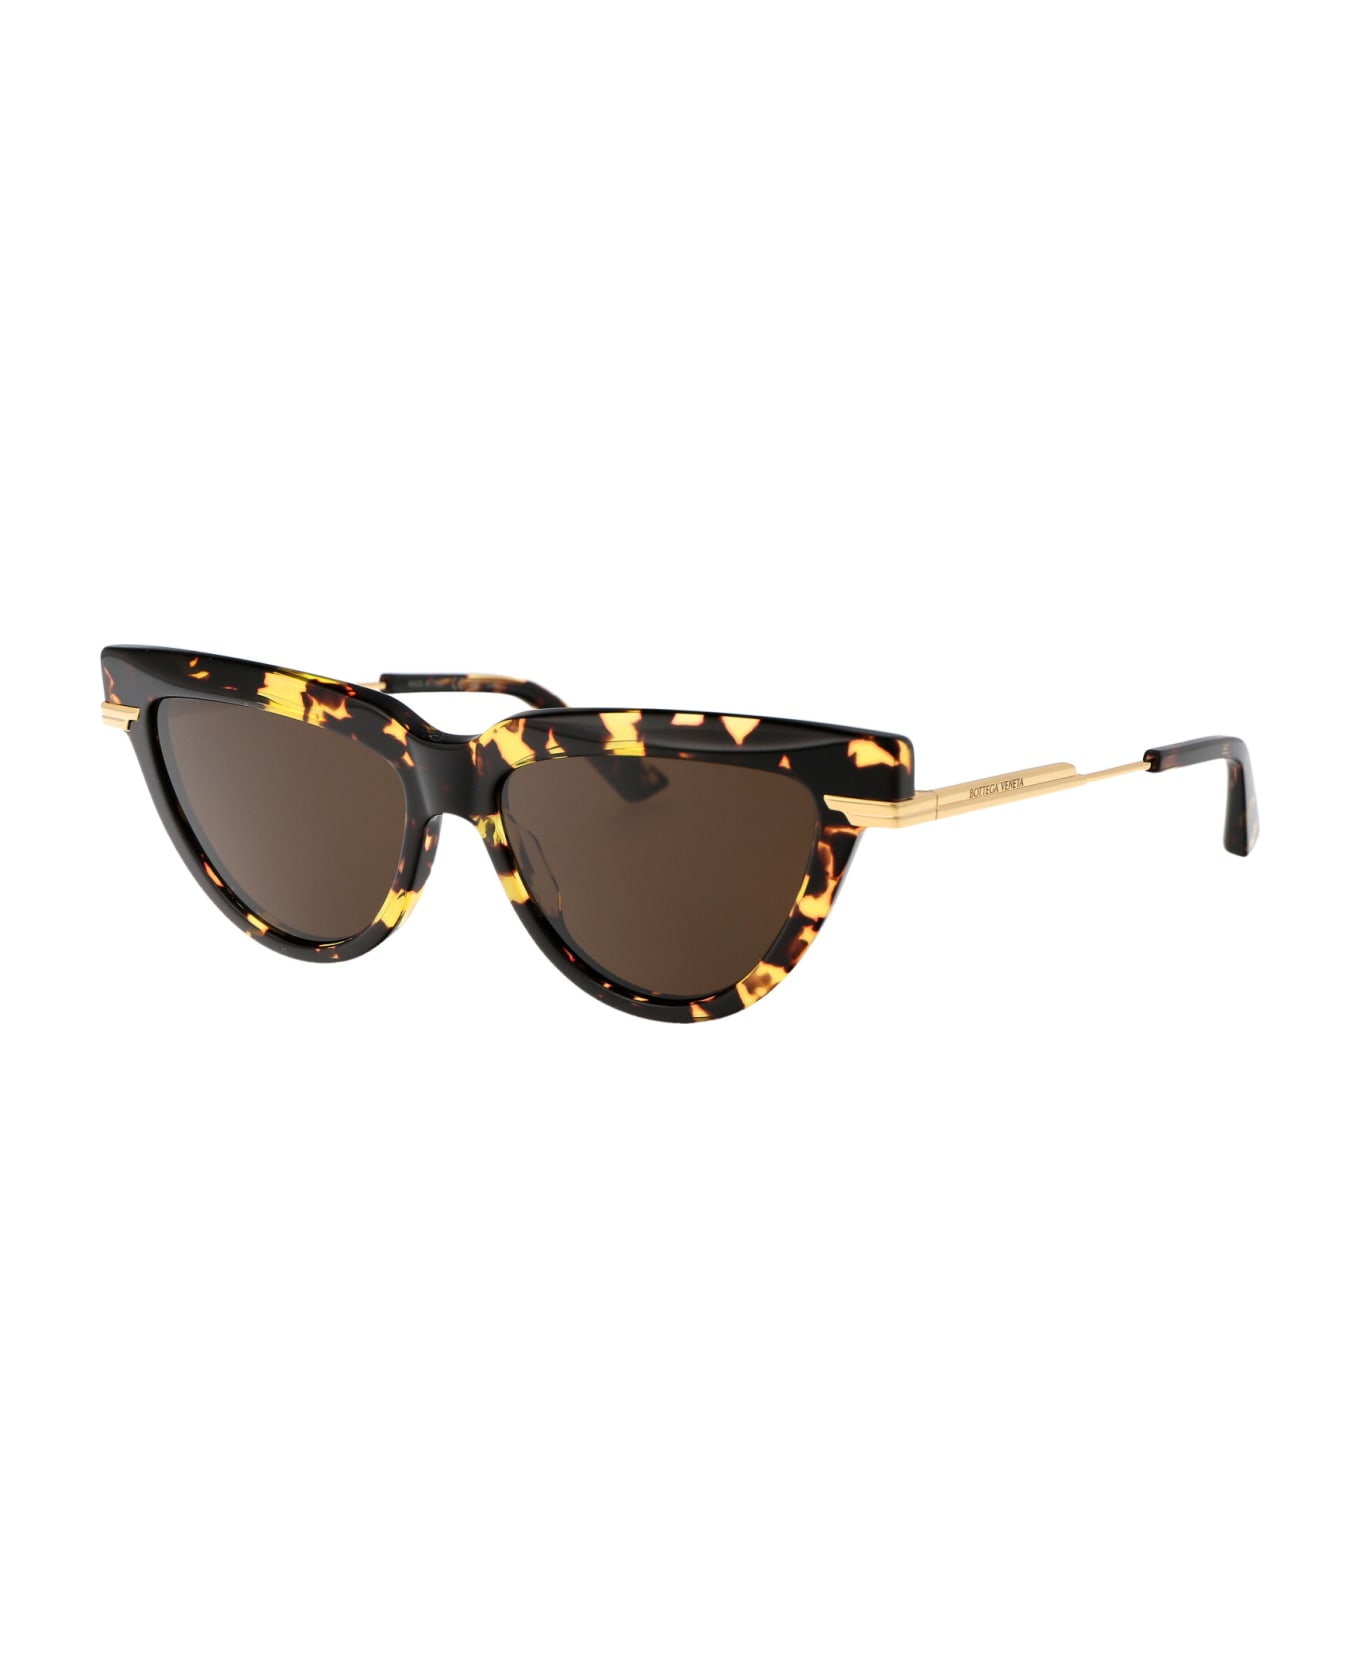 Bottega Veneta Eyewear Bv1265s Sunglasses - 002 HAVANA GOLD BROWN